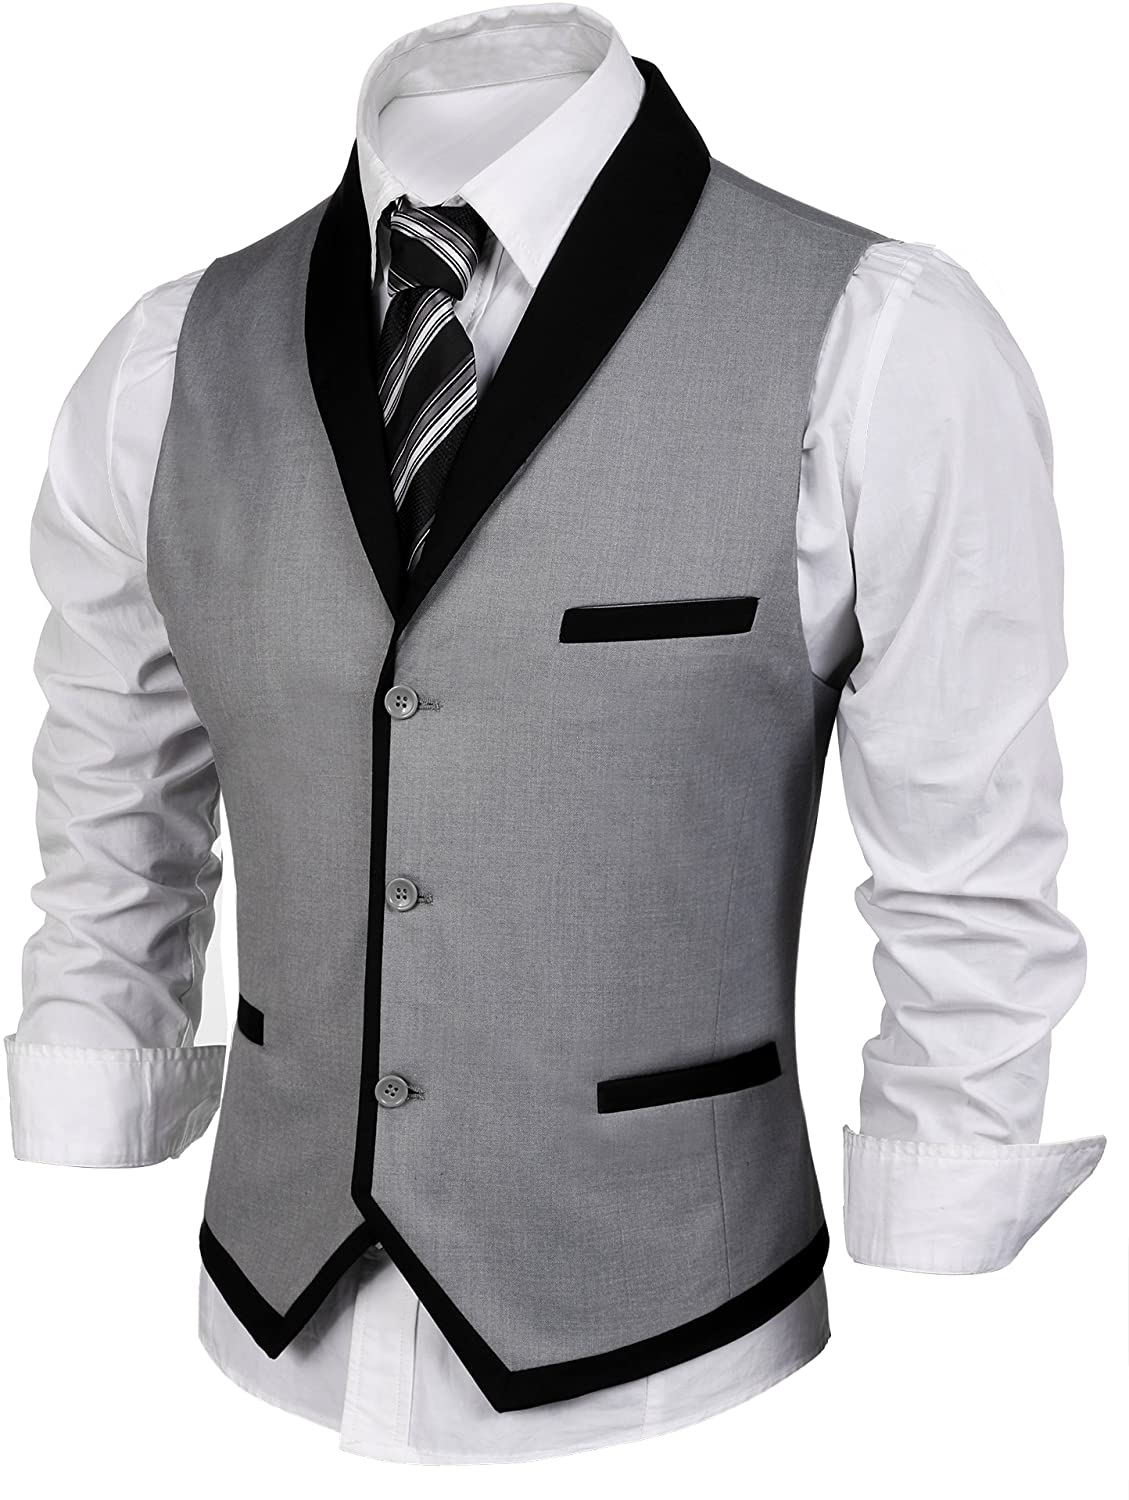 JINIDU Mens Slim Fit Wedding Waistcoat Casual Regular Fit Business Suit Vests 